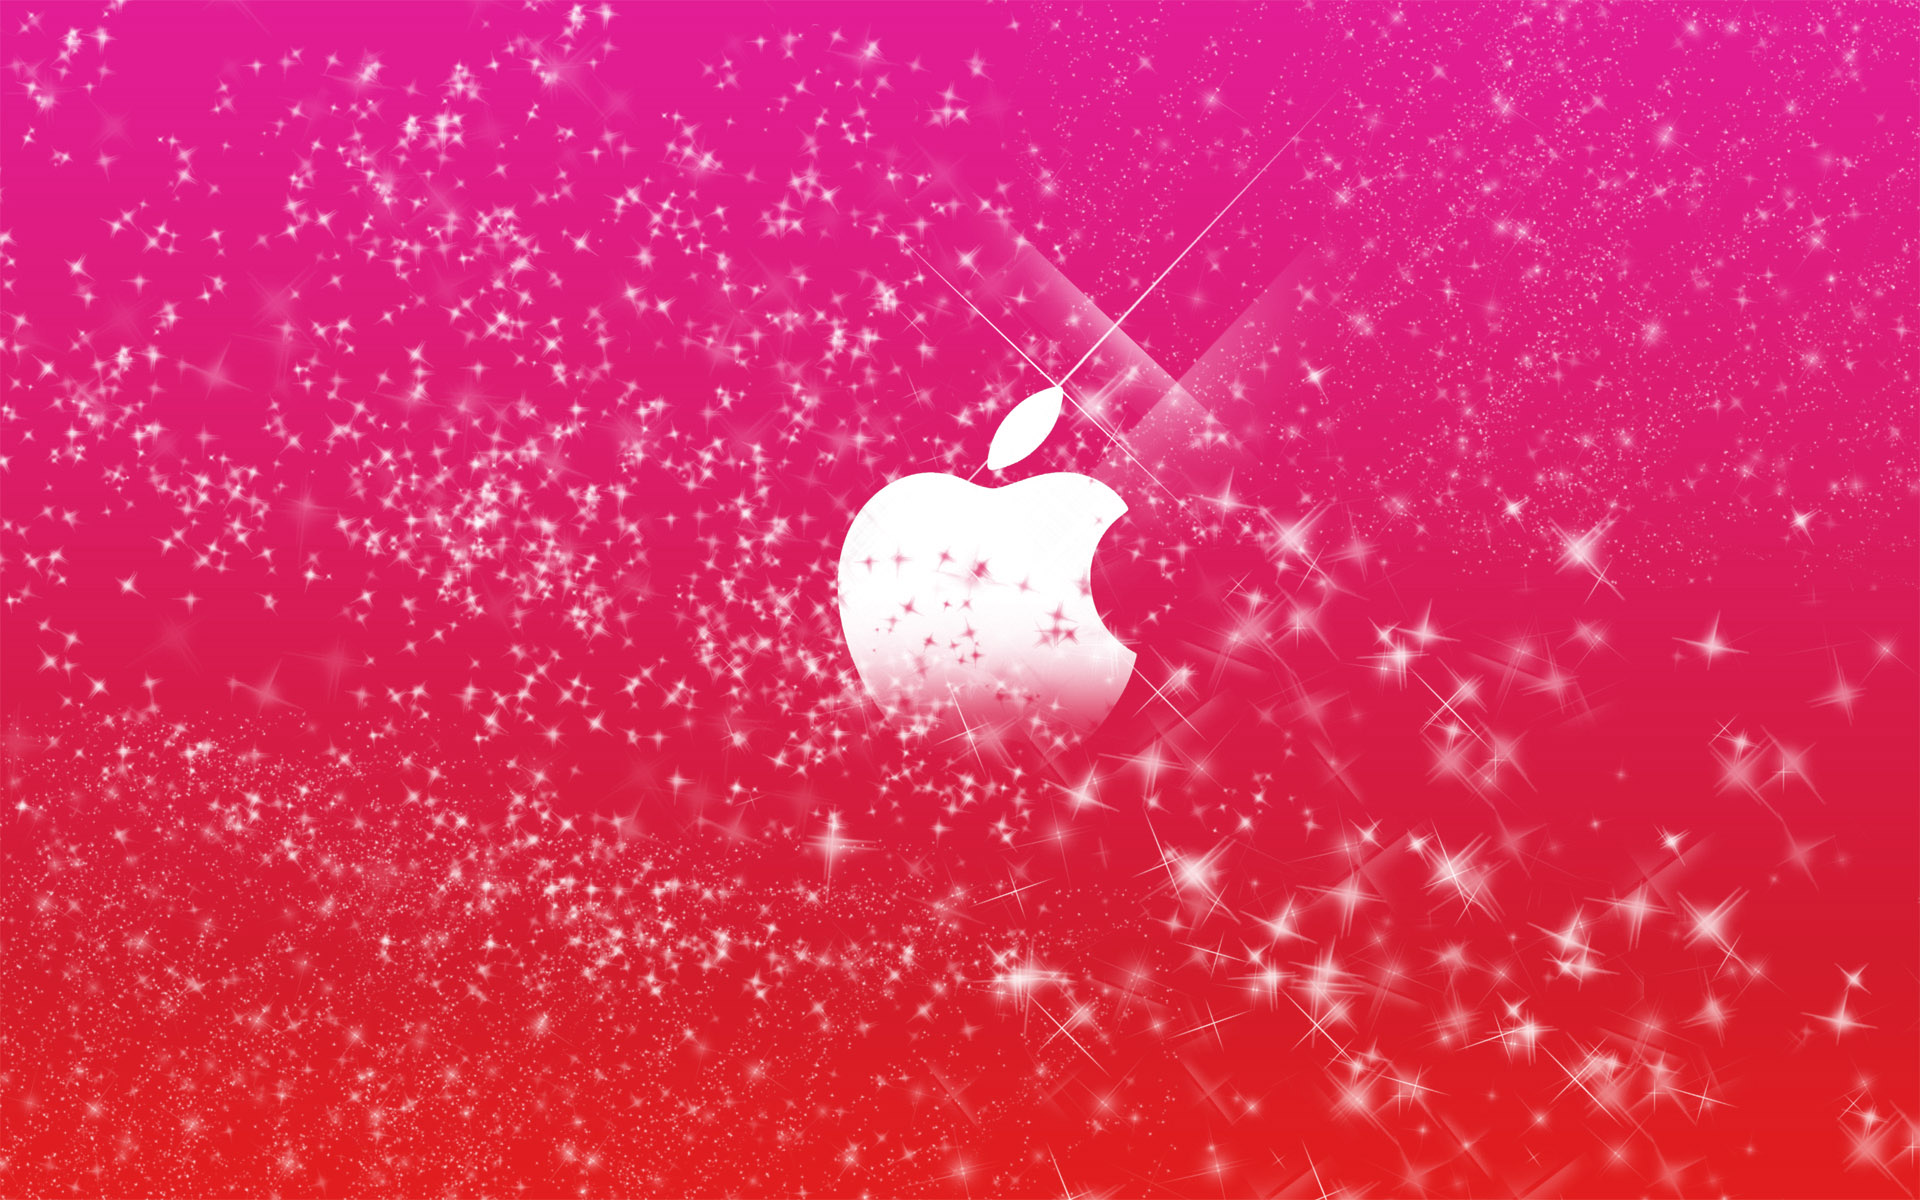 Apple Logo in Pink Glitters Wallpapers HD Wallpapers